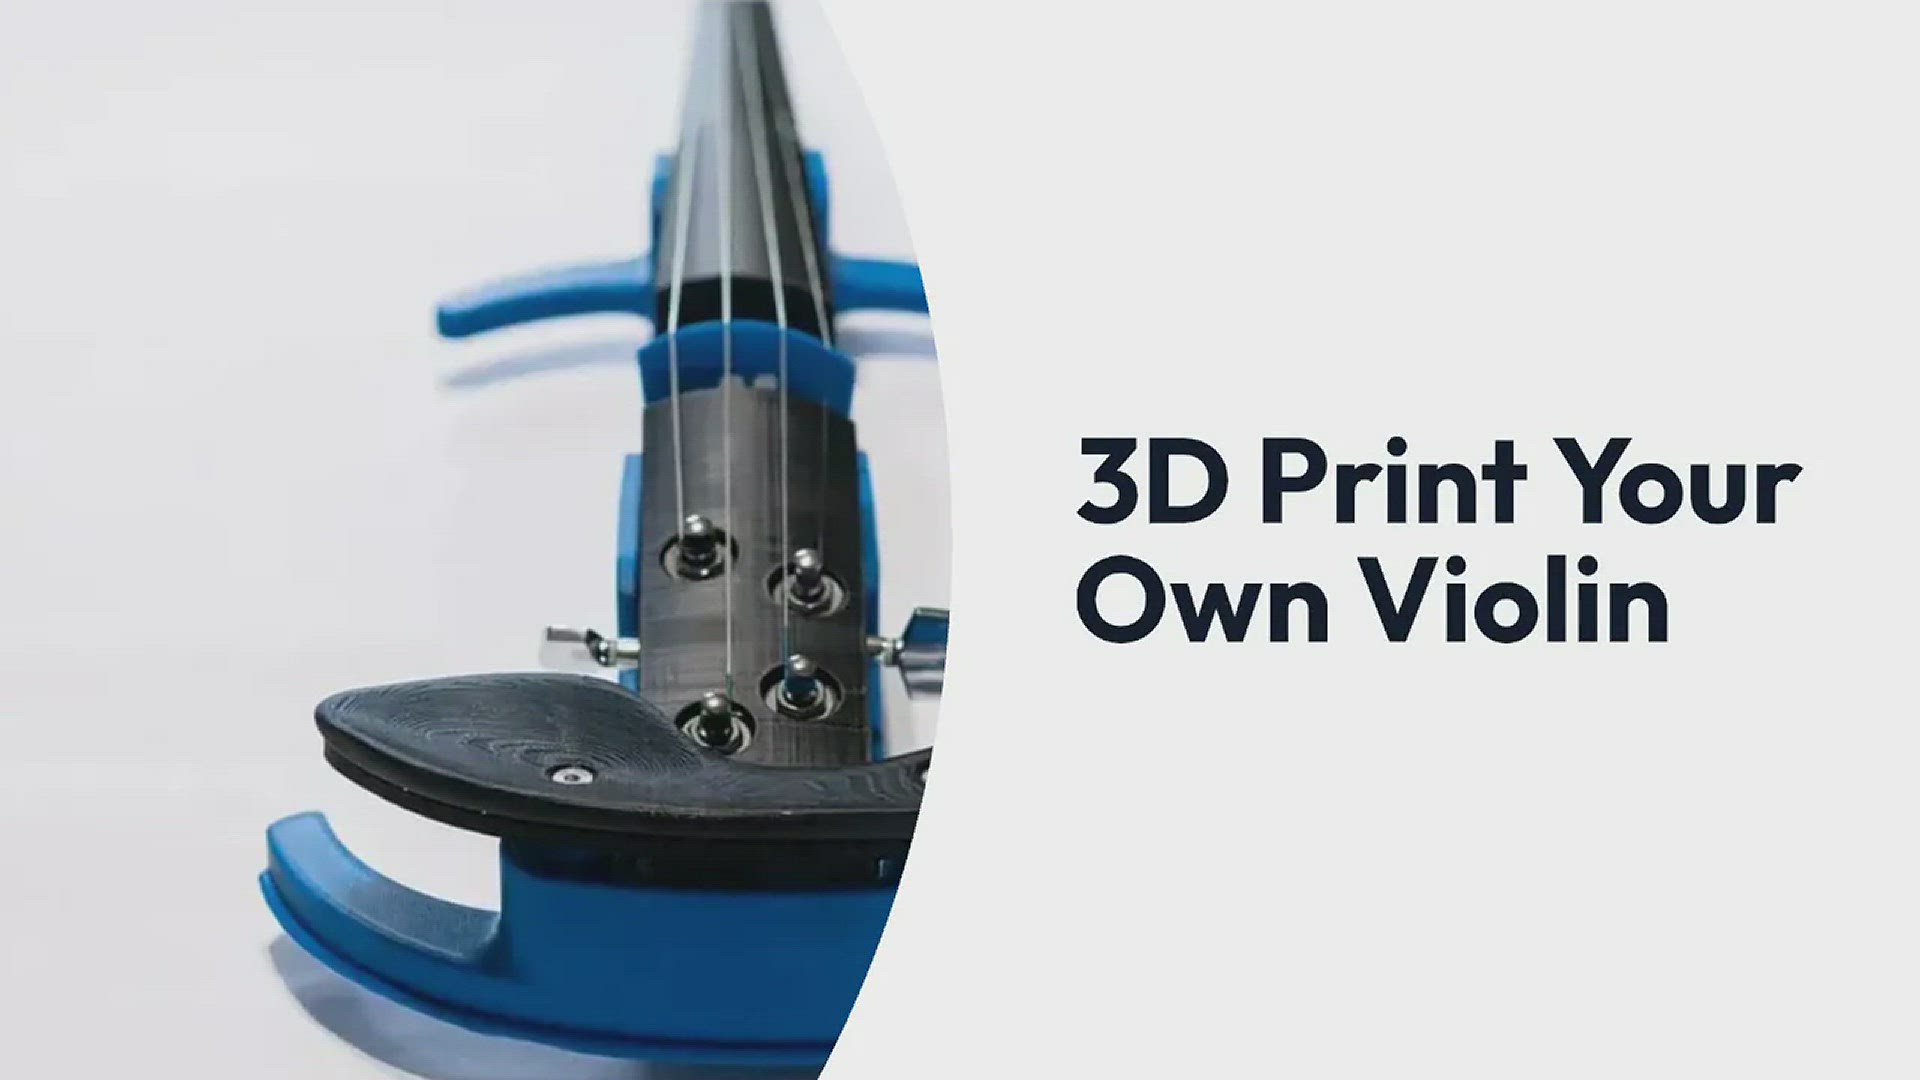 'Video thumbnail for 3D Printed Violin'